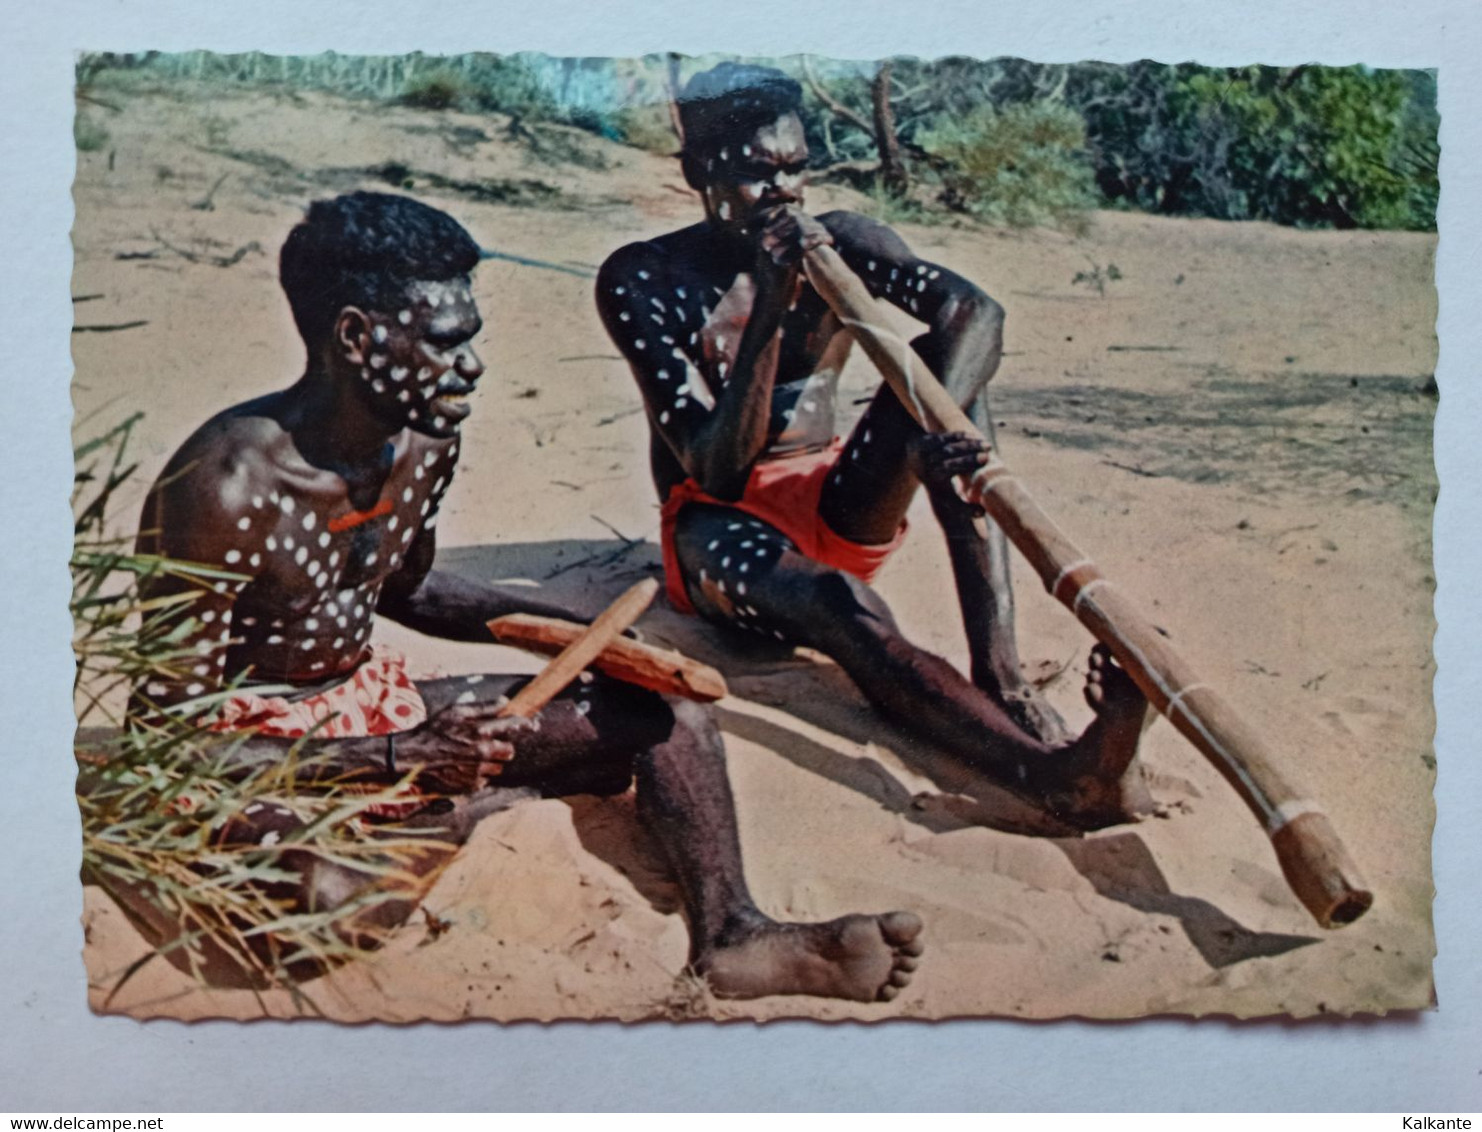 1978 - ABORIGENES PLAYING THE DIDGERIDOO - Aborigeni